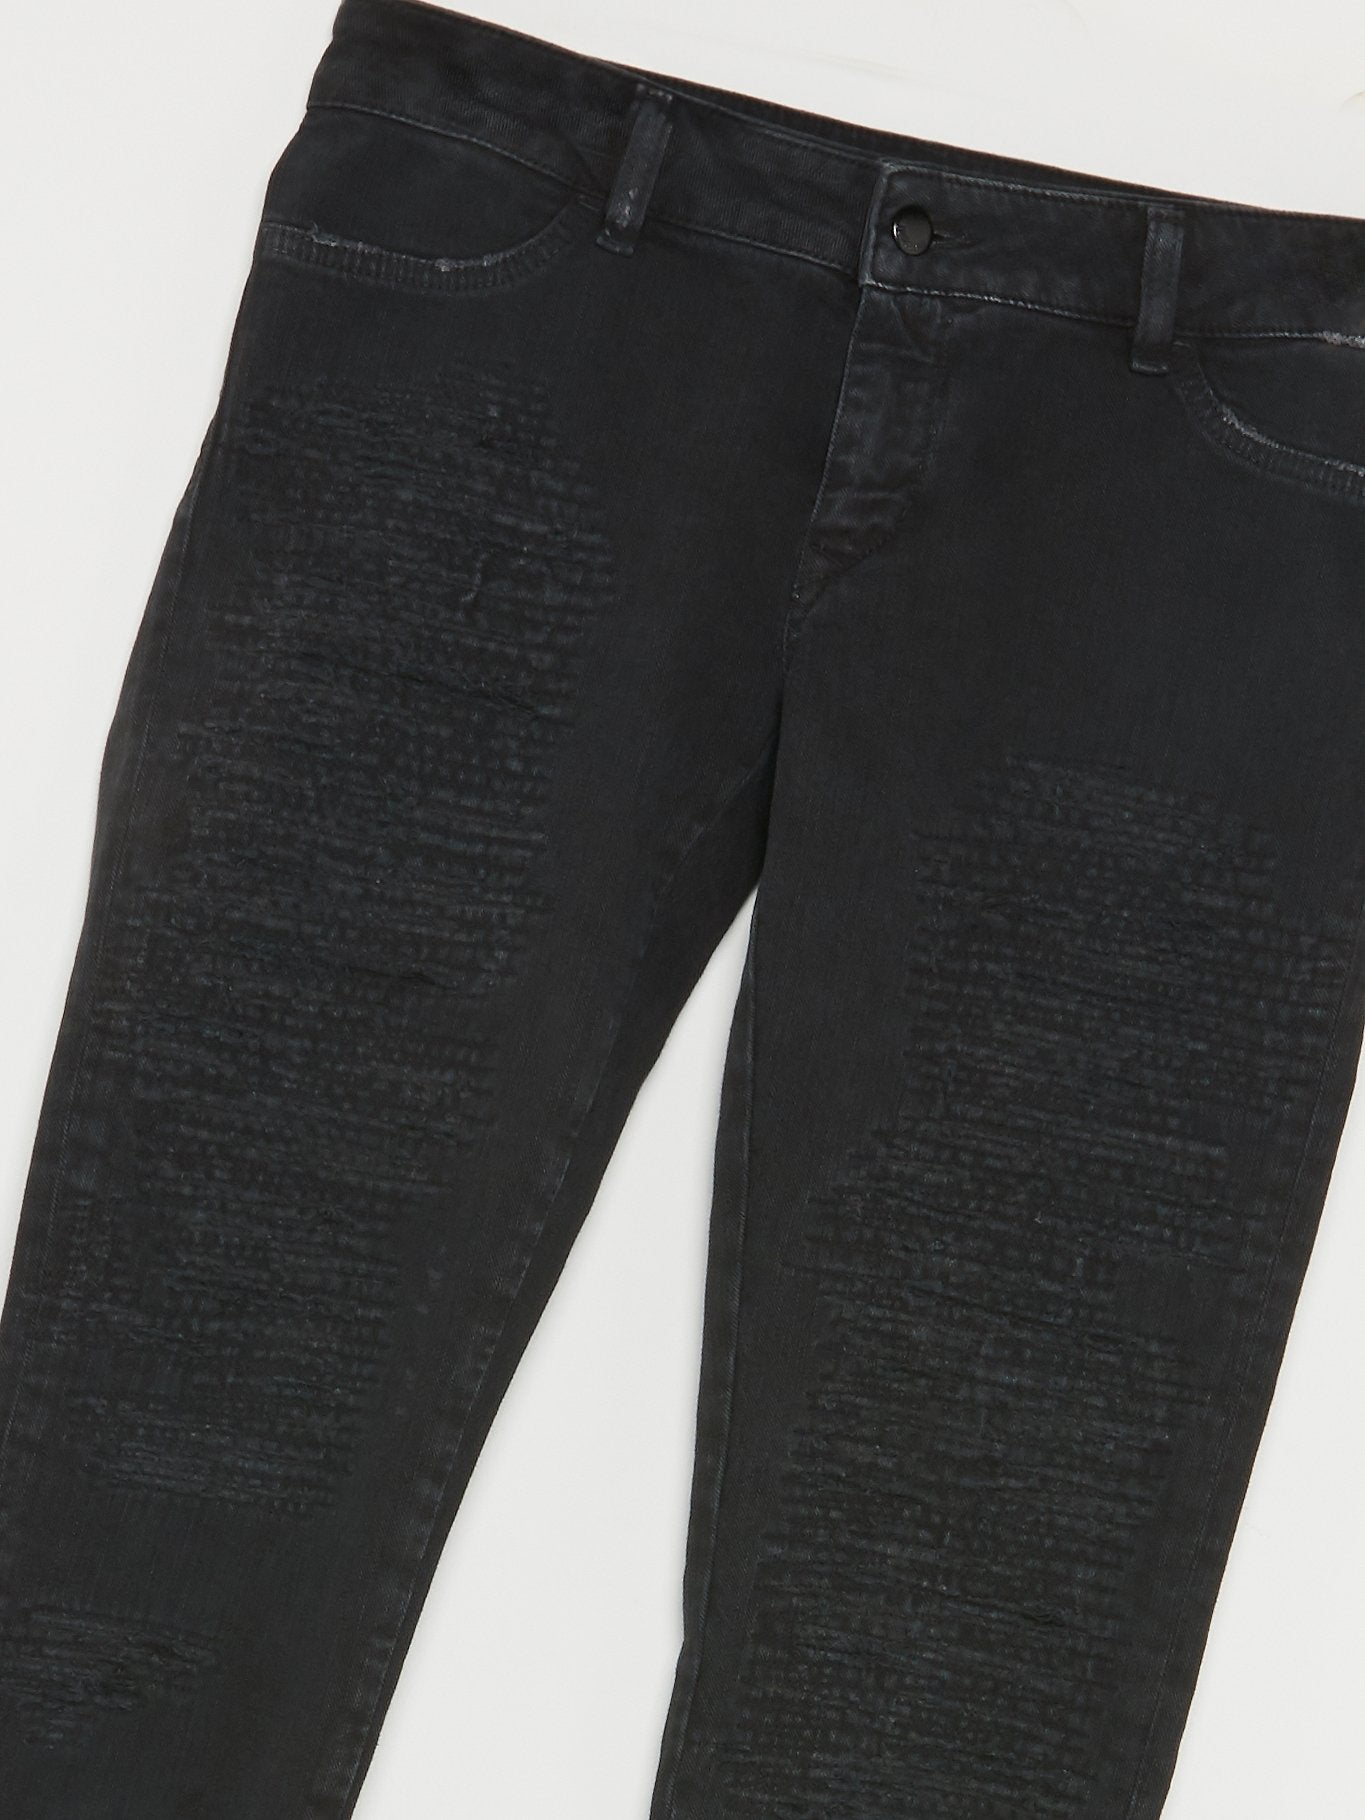 Black Tattered Denim Jeans